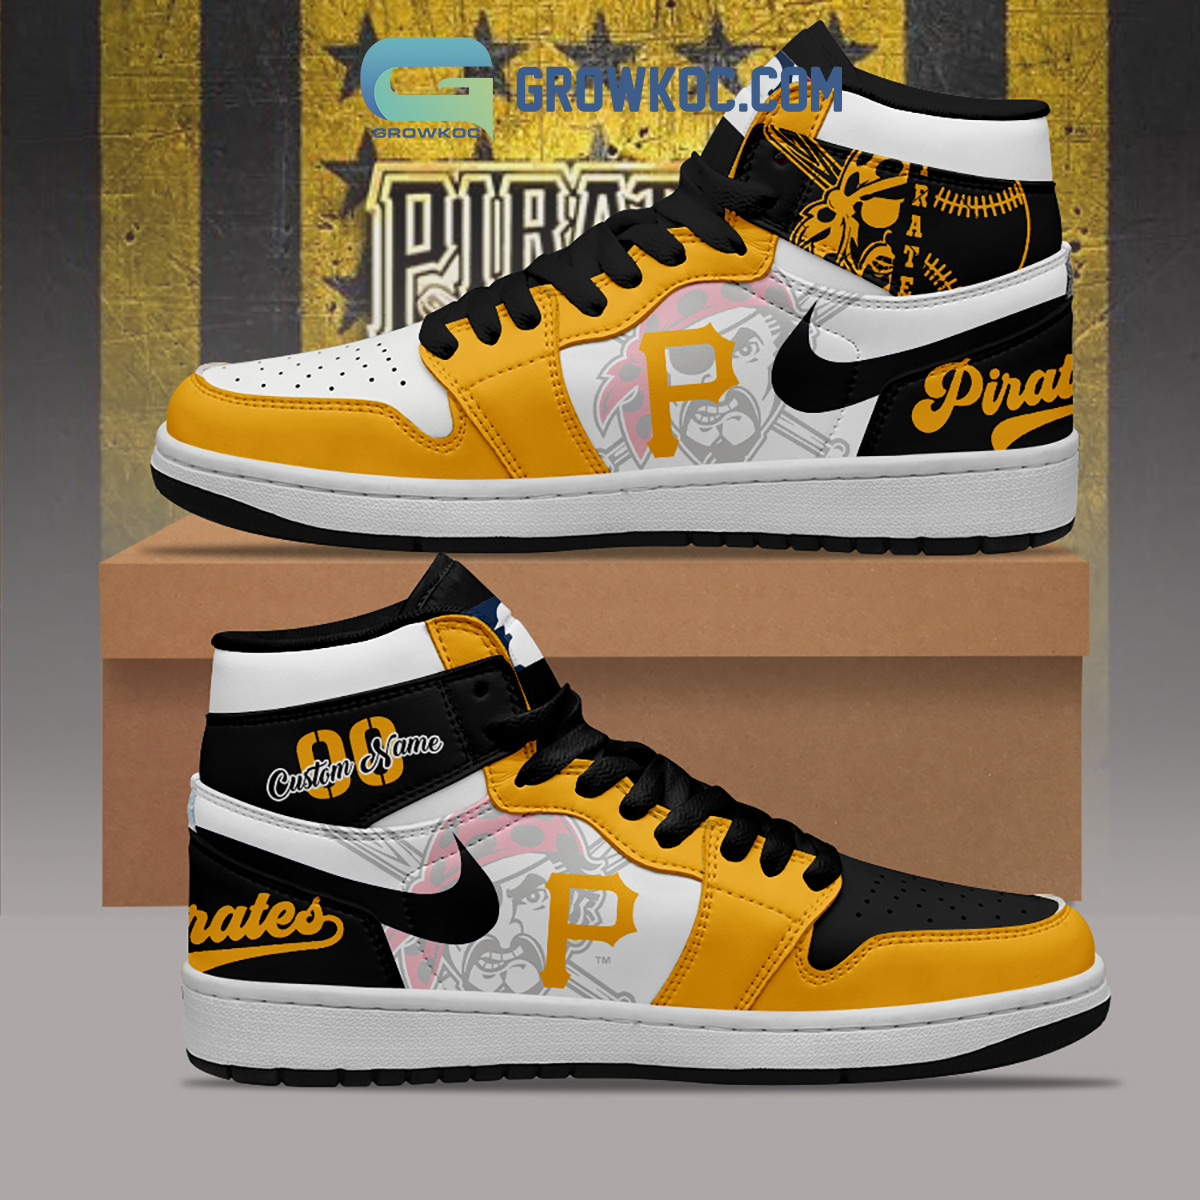 Pittsburgh Pirates MLB Personalized Air Jordan 1 Shoes - Growkoc